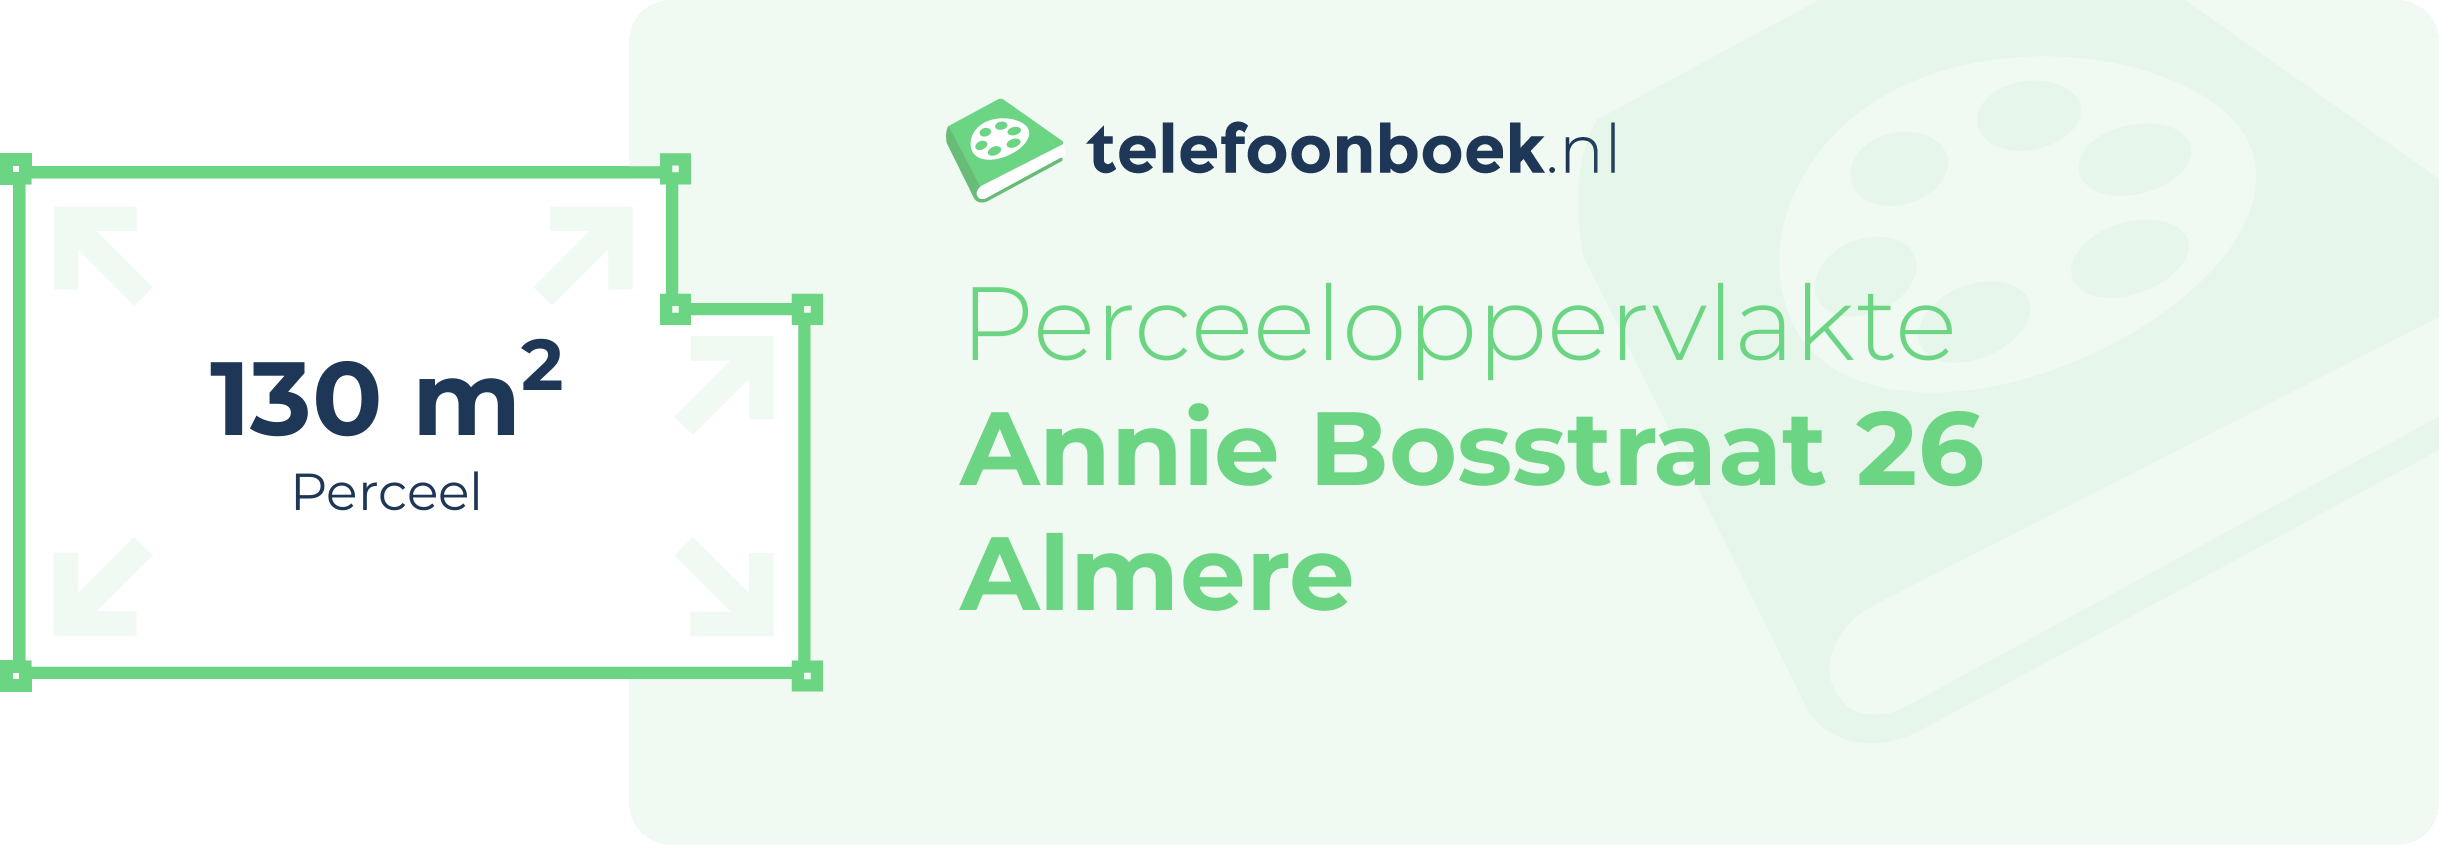 Perceeloppervlakte Annie Bosstraat 26 Almere